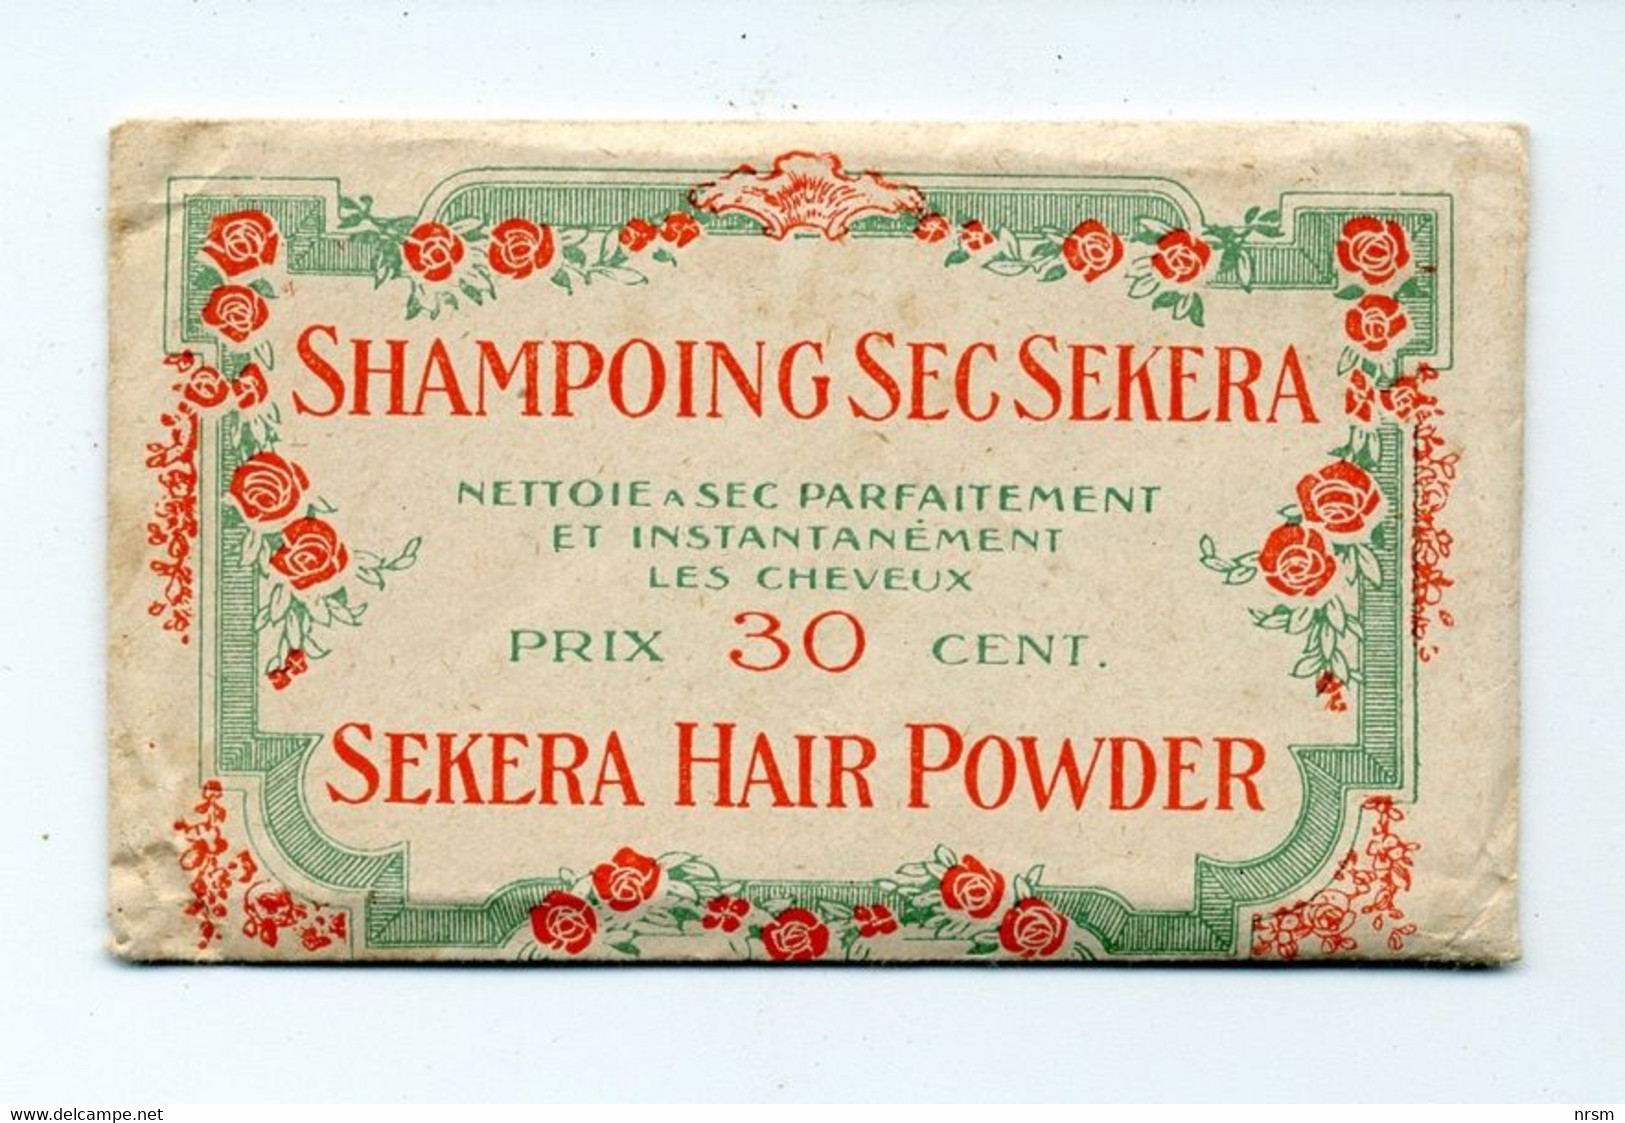 Shampoing Sec SEKERA / Ancien Sachet De Shampoing En Poudre / Sekera Hair Powder - Produits De Beauté